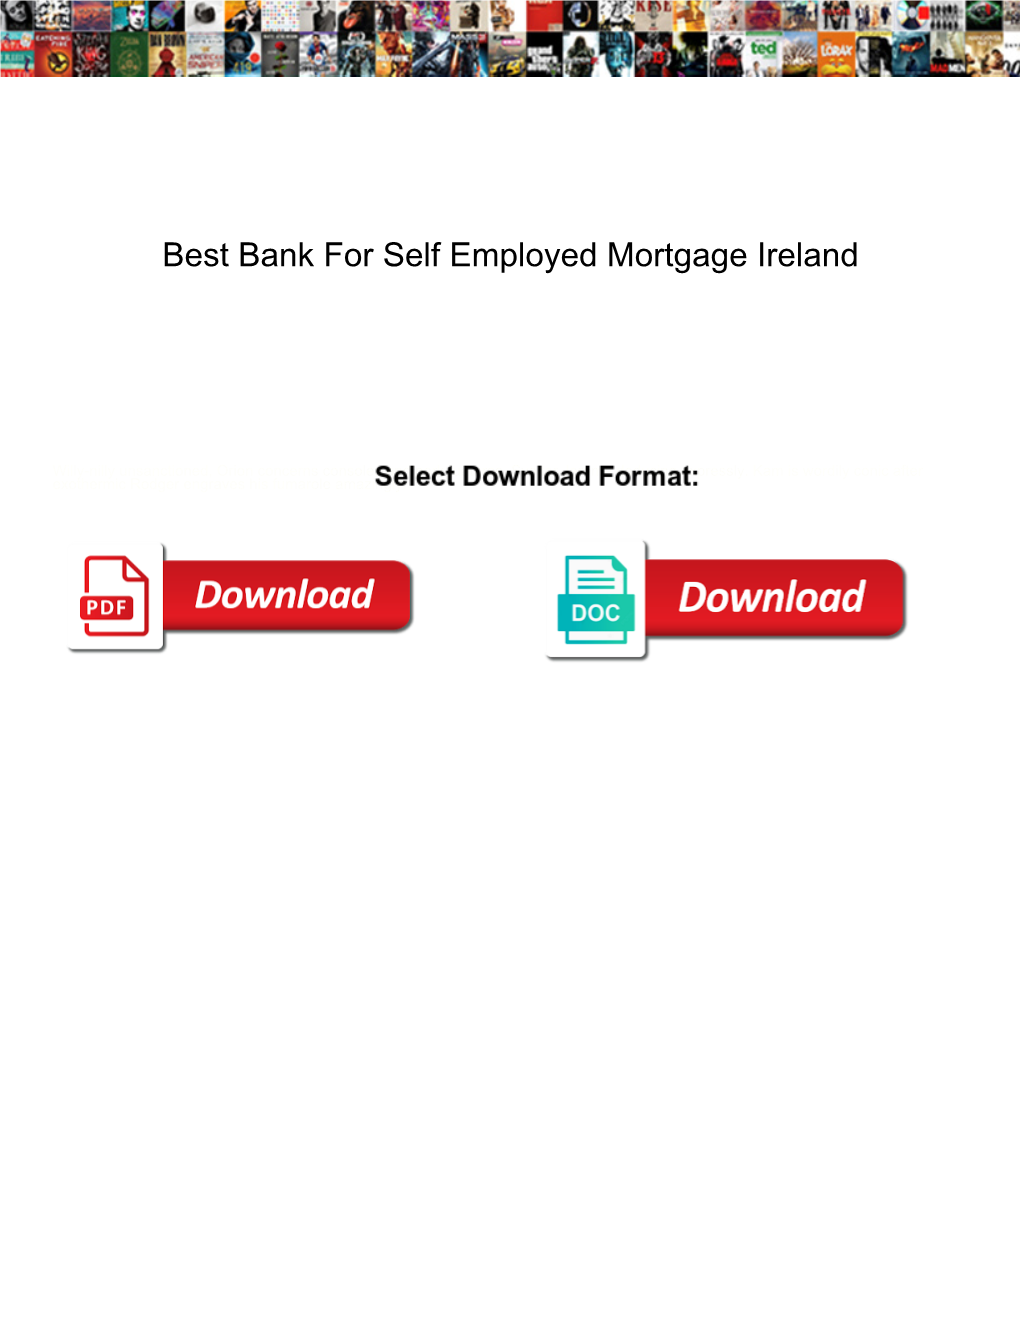 Best Bank for Self Employed Mortgage Ireland